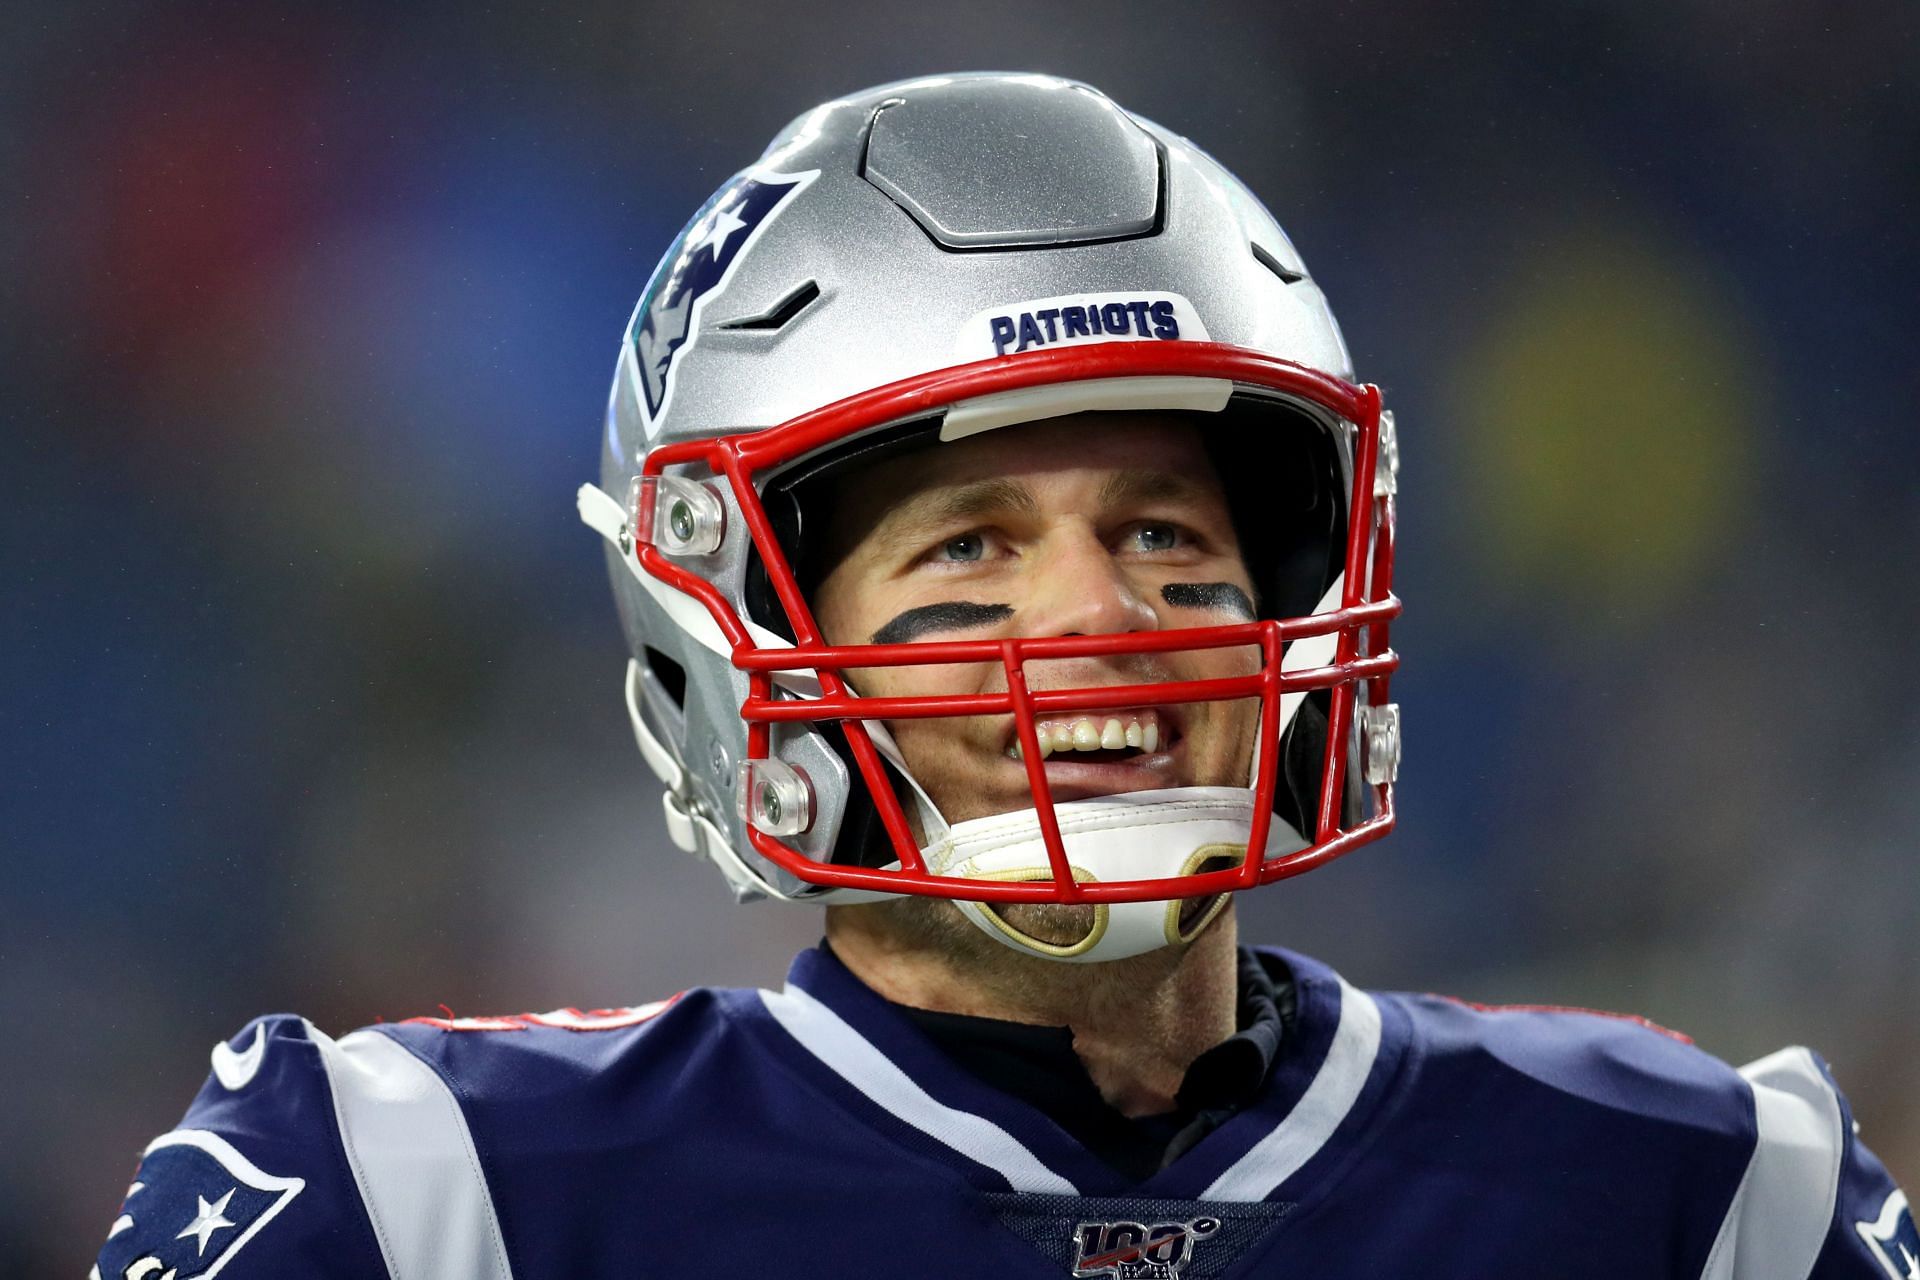 Former New England Patriots QB Tom Brady